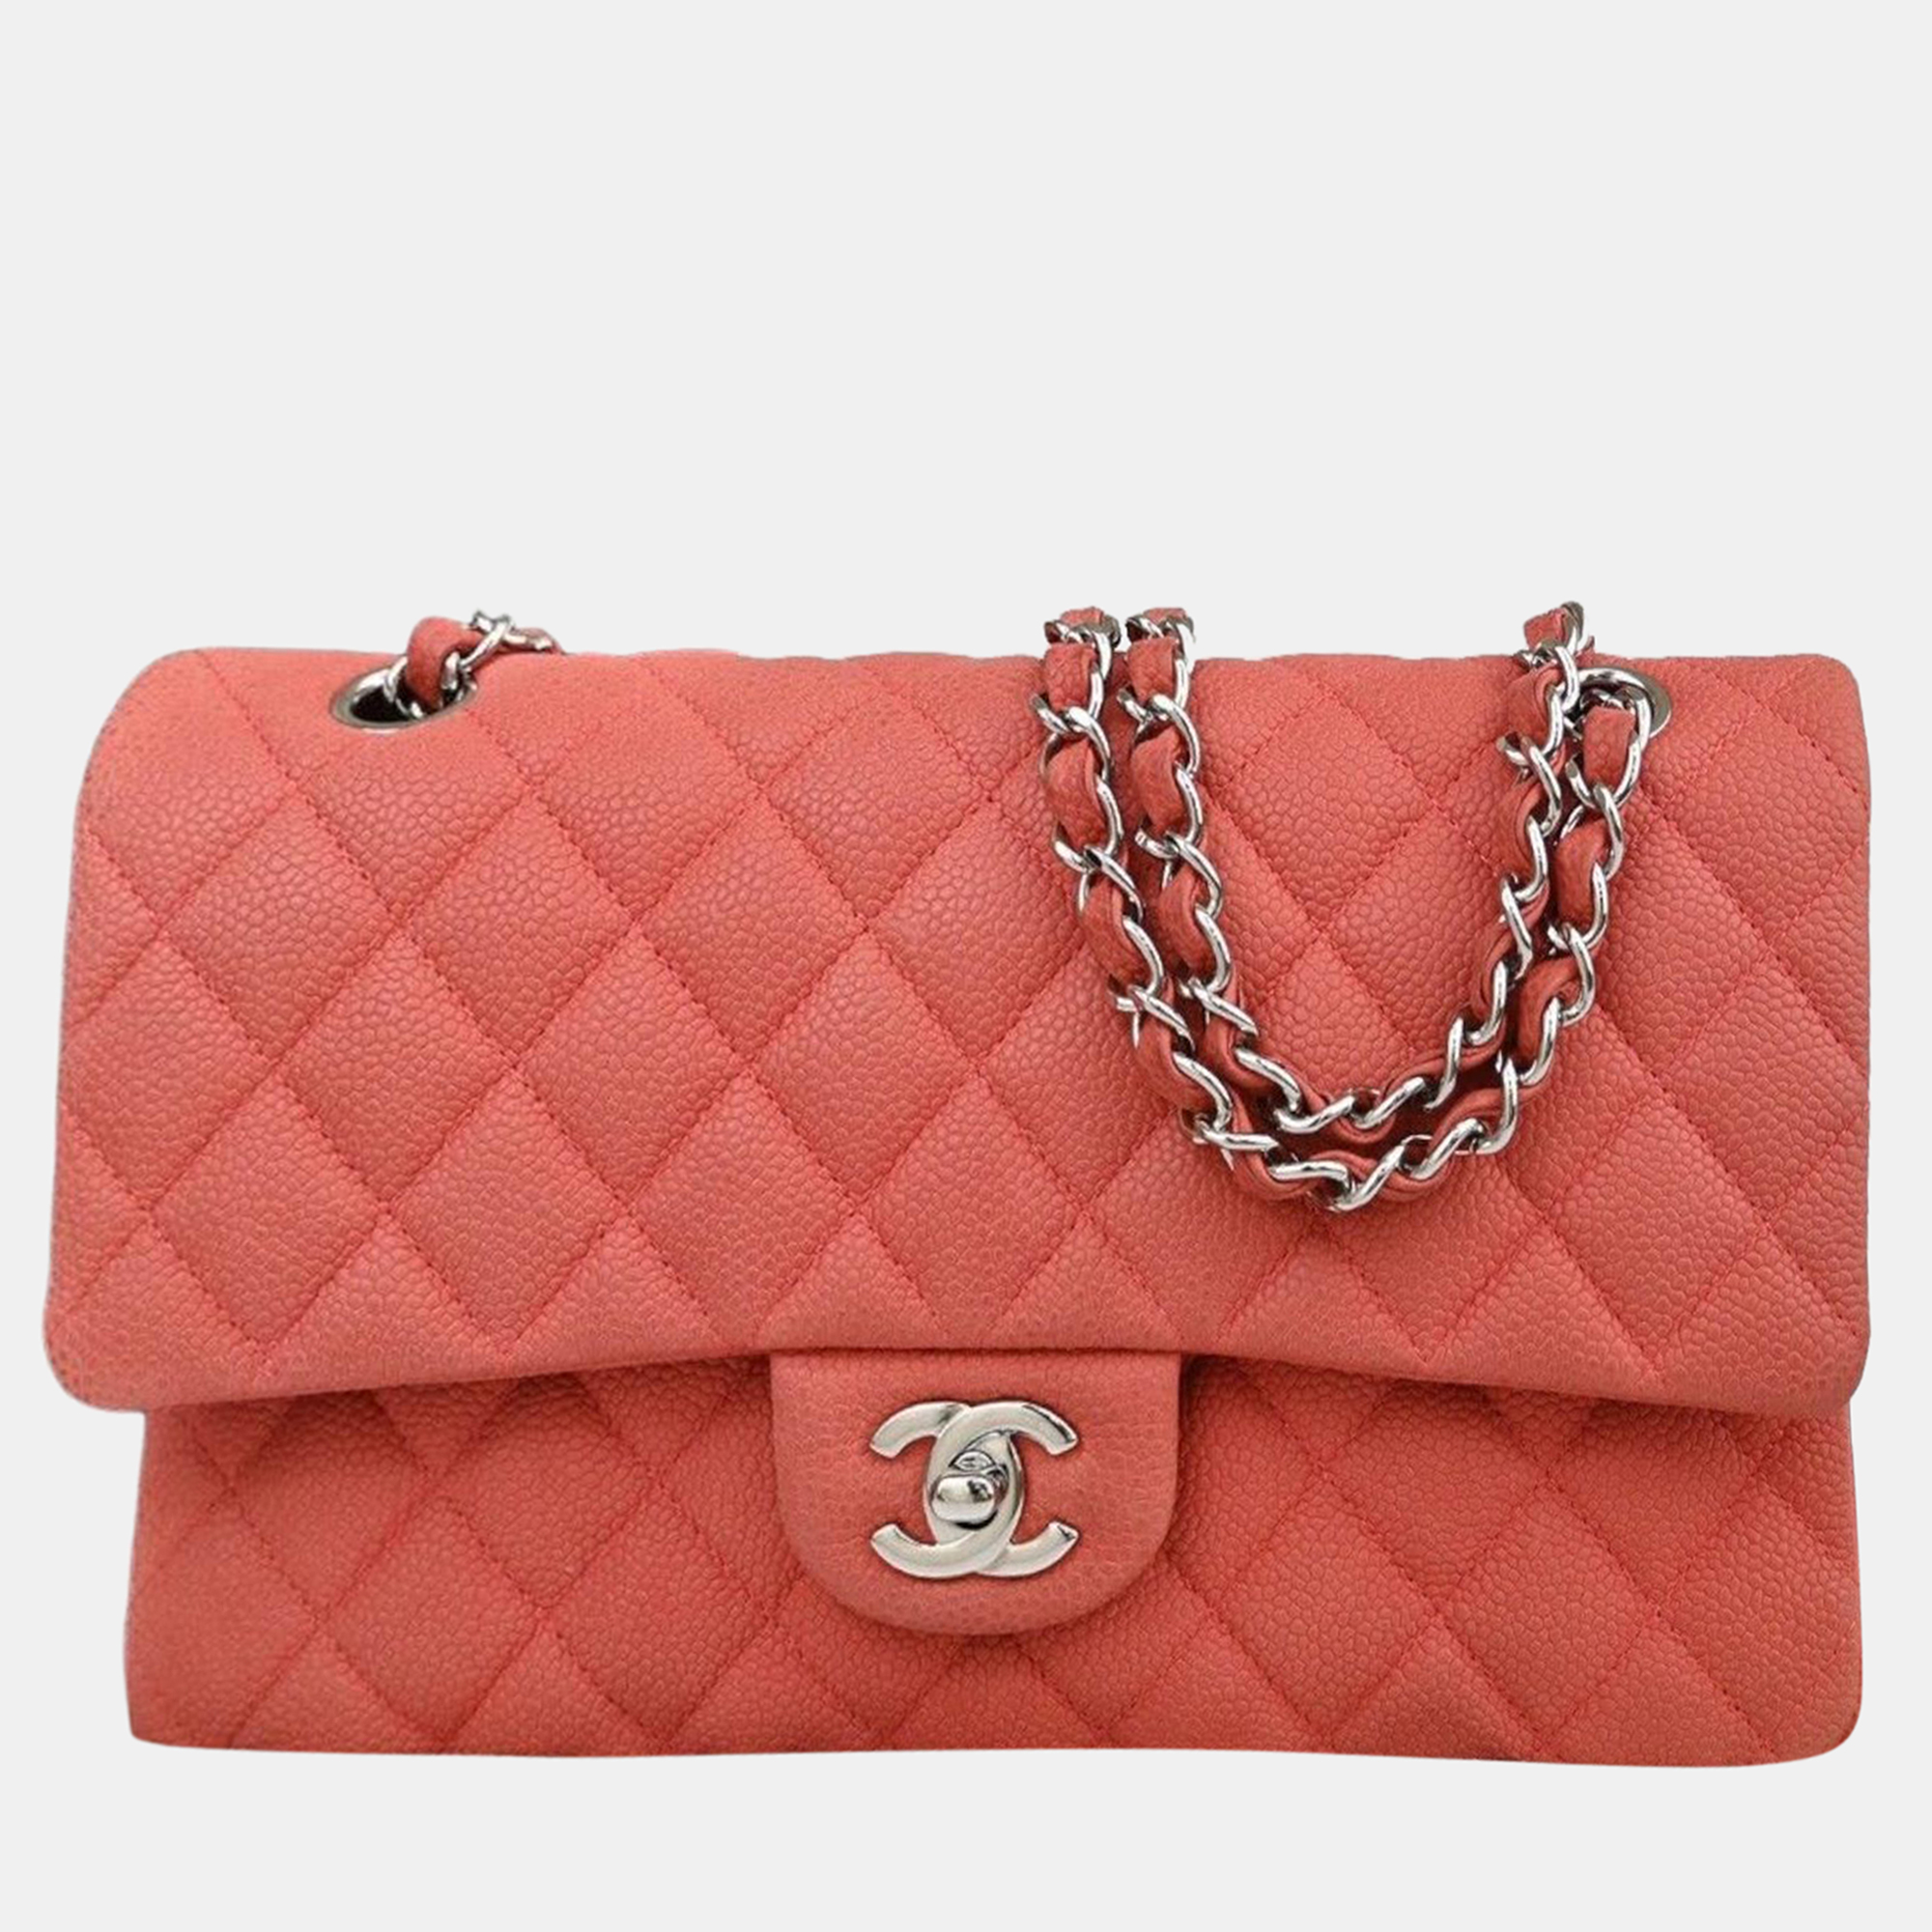 Chanel peach caviar leather medium classic double flap shoulder bag